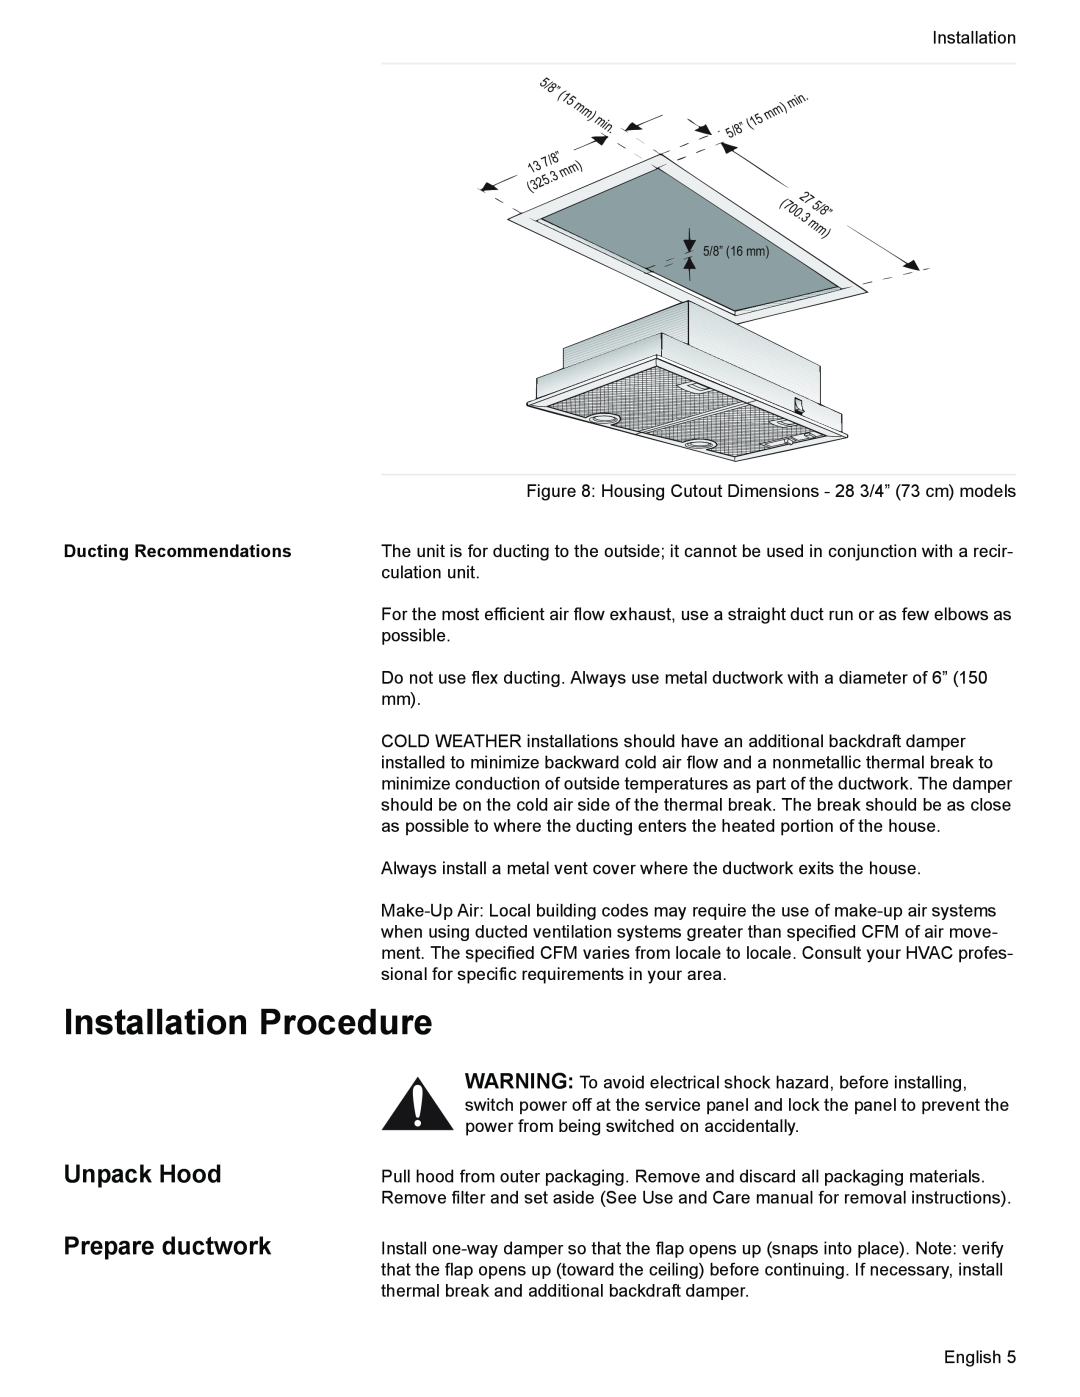 Bosch Appliances DHL 755 B Installation Procedure, Unpack Hood, Prepare ductwork, Ducting Recommendations 